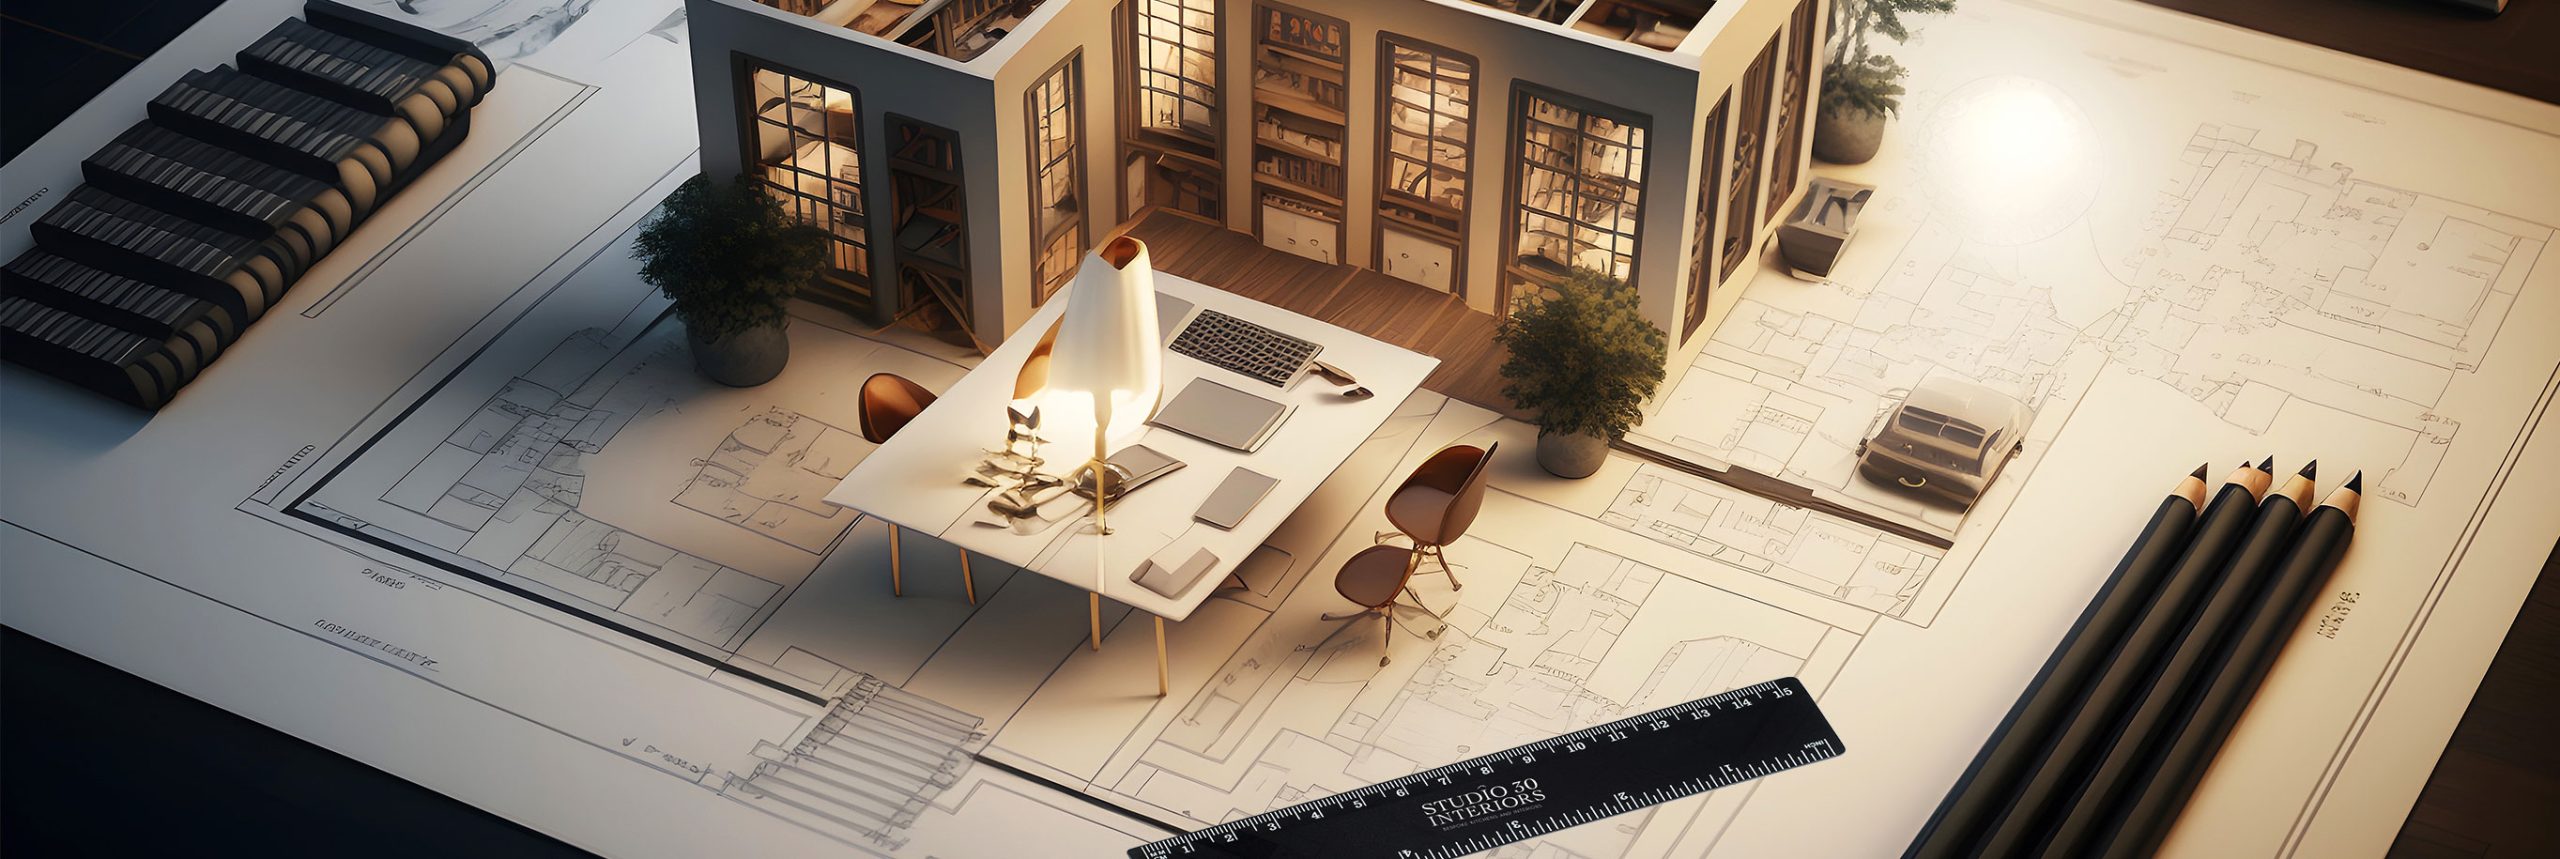 Studio 30 Interiors: Property Developer Collaboration